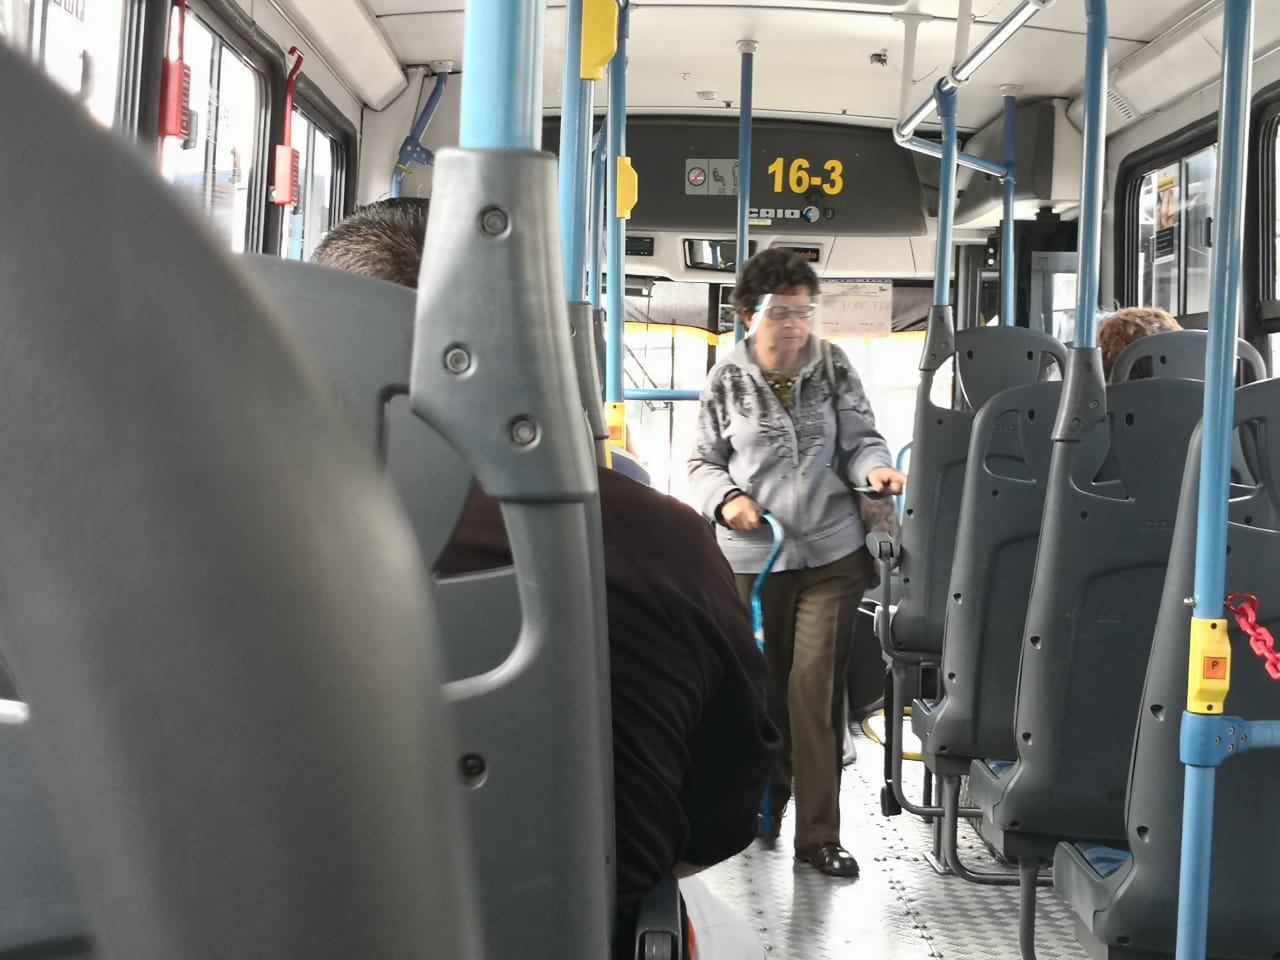 Plan piloto de pago electrónico en buses arrancaría en 6 meses